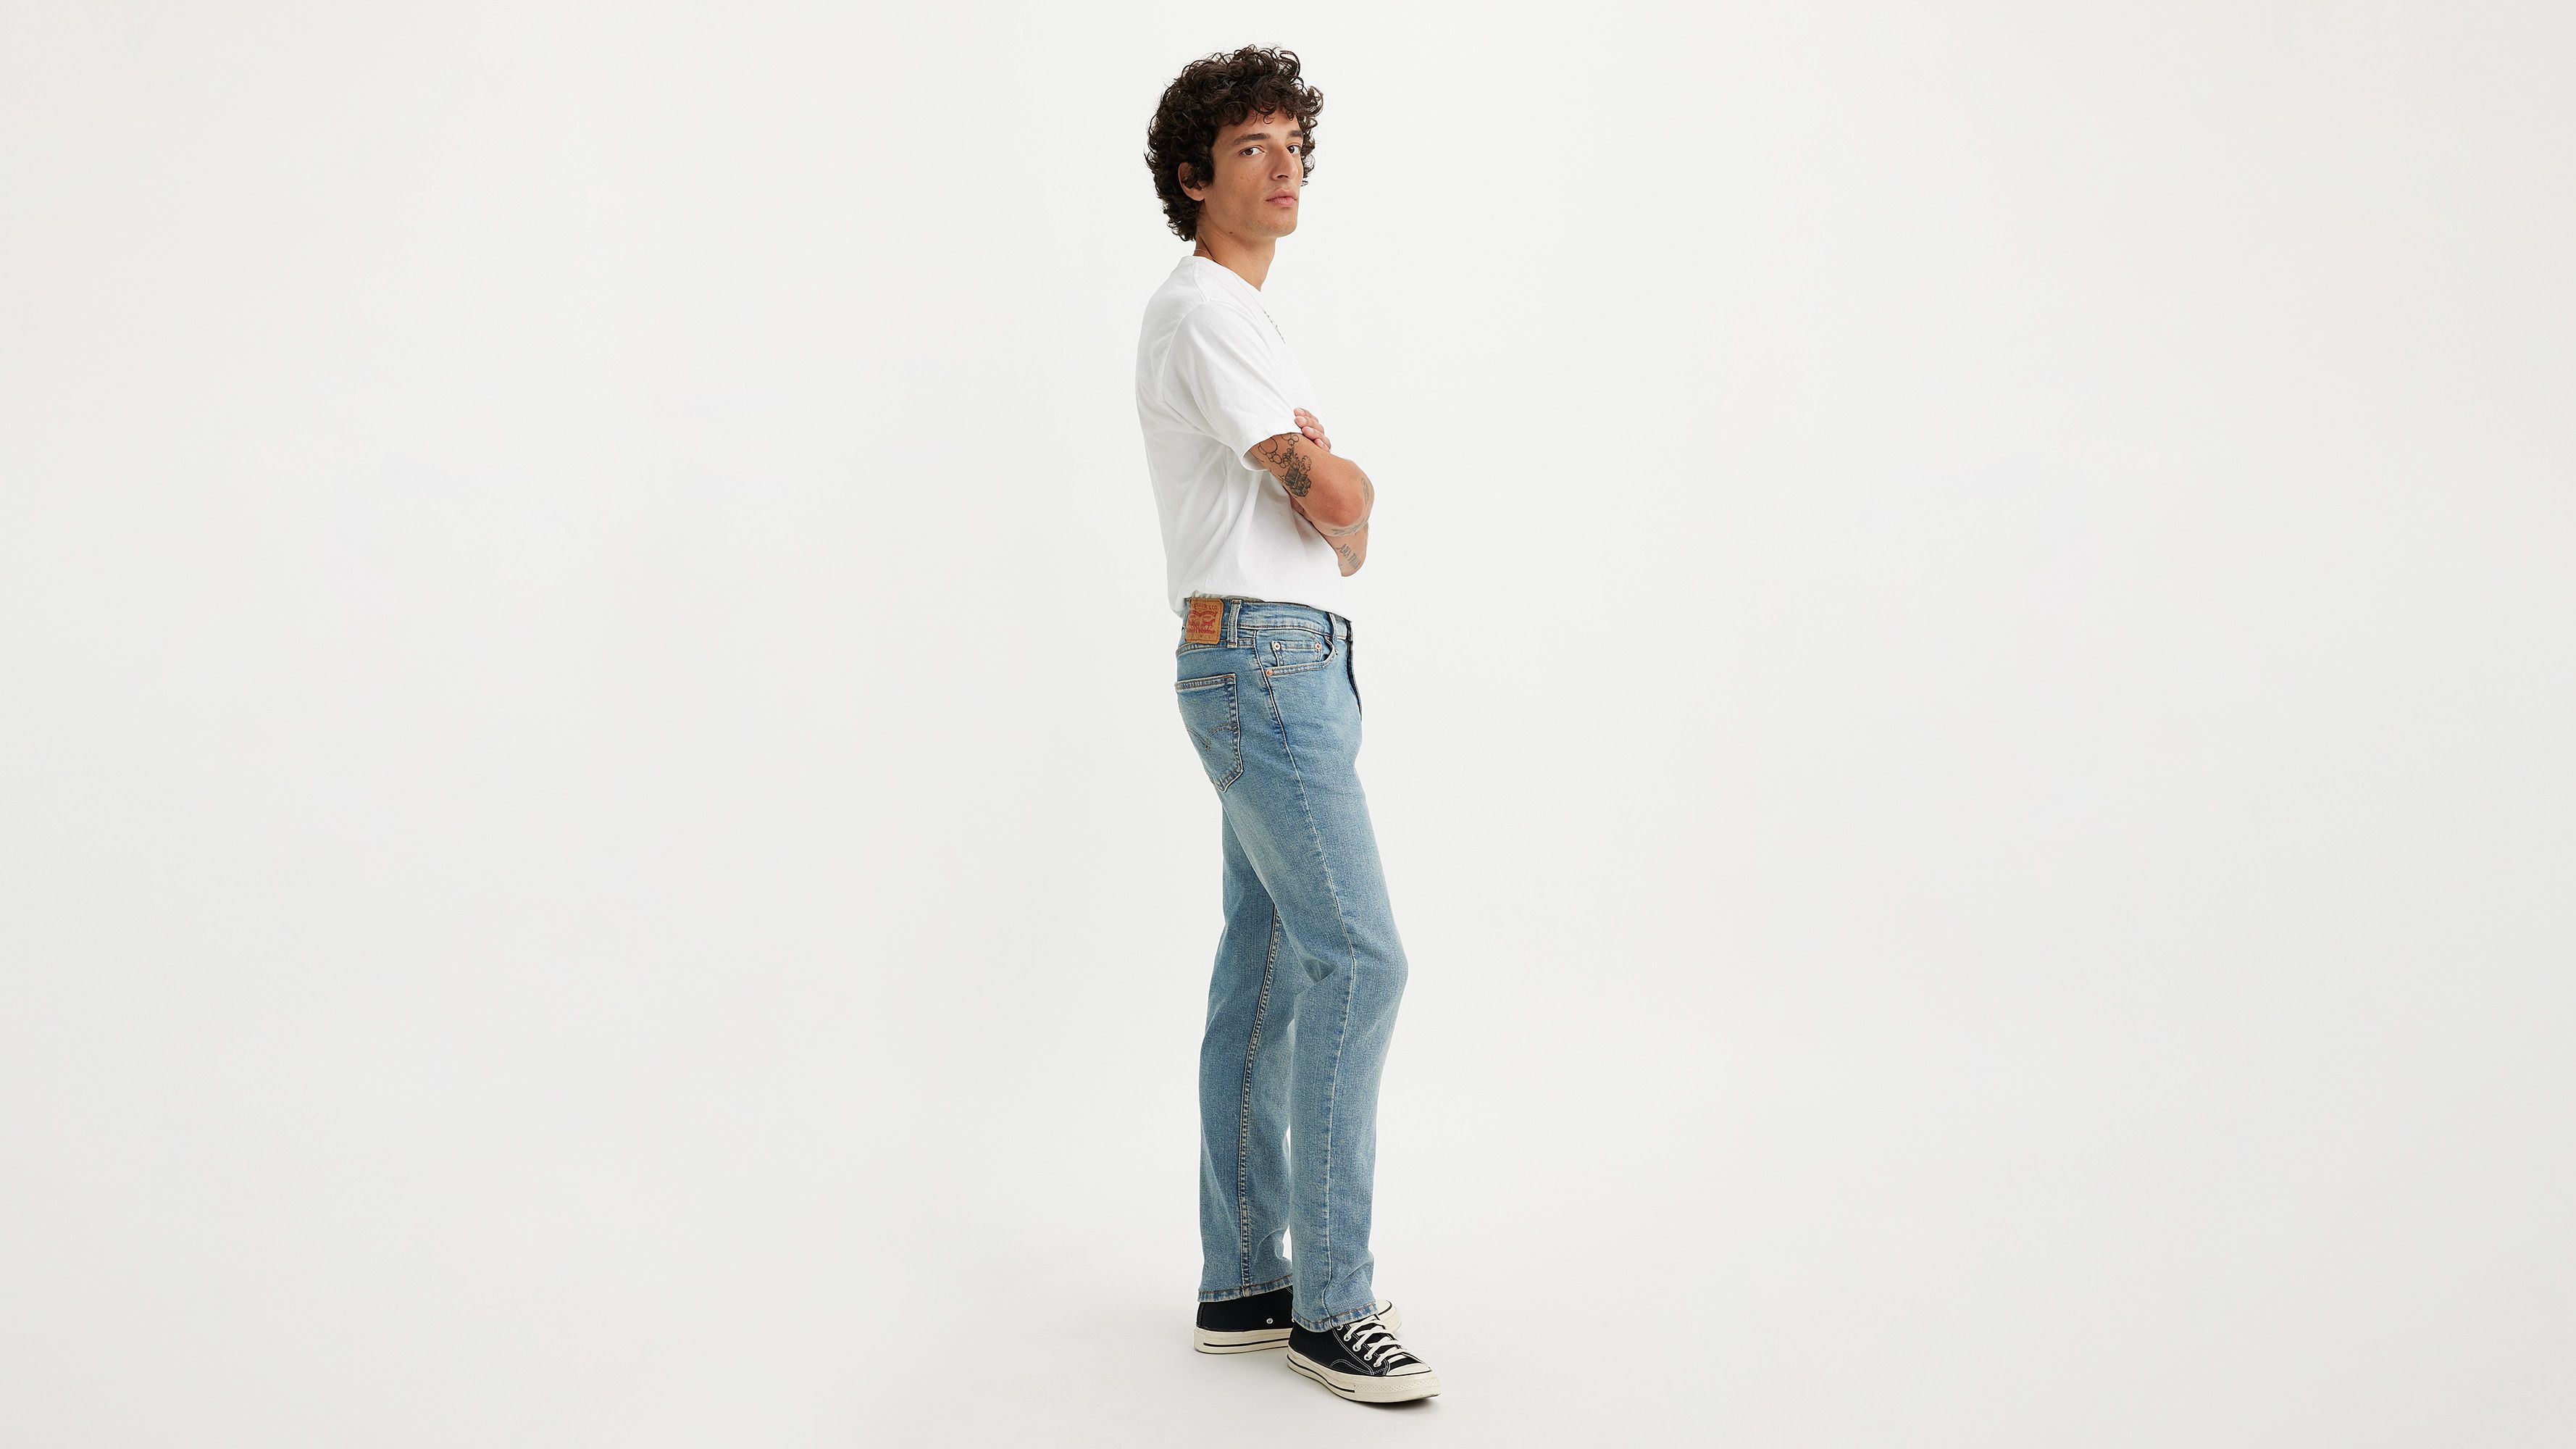 OZYSZSSZBESAN Men's Pants, Men Jeans Stretch Ankle Zipper Skinny Jeans For Men  Slim Jeans Travel Safari Pants (Size : Medium) price in UAE | Amazon UAE |  kanbkam